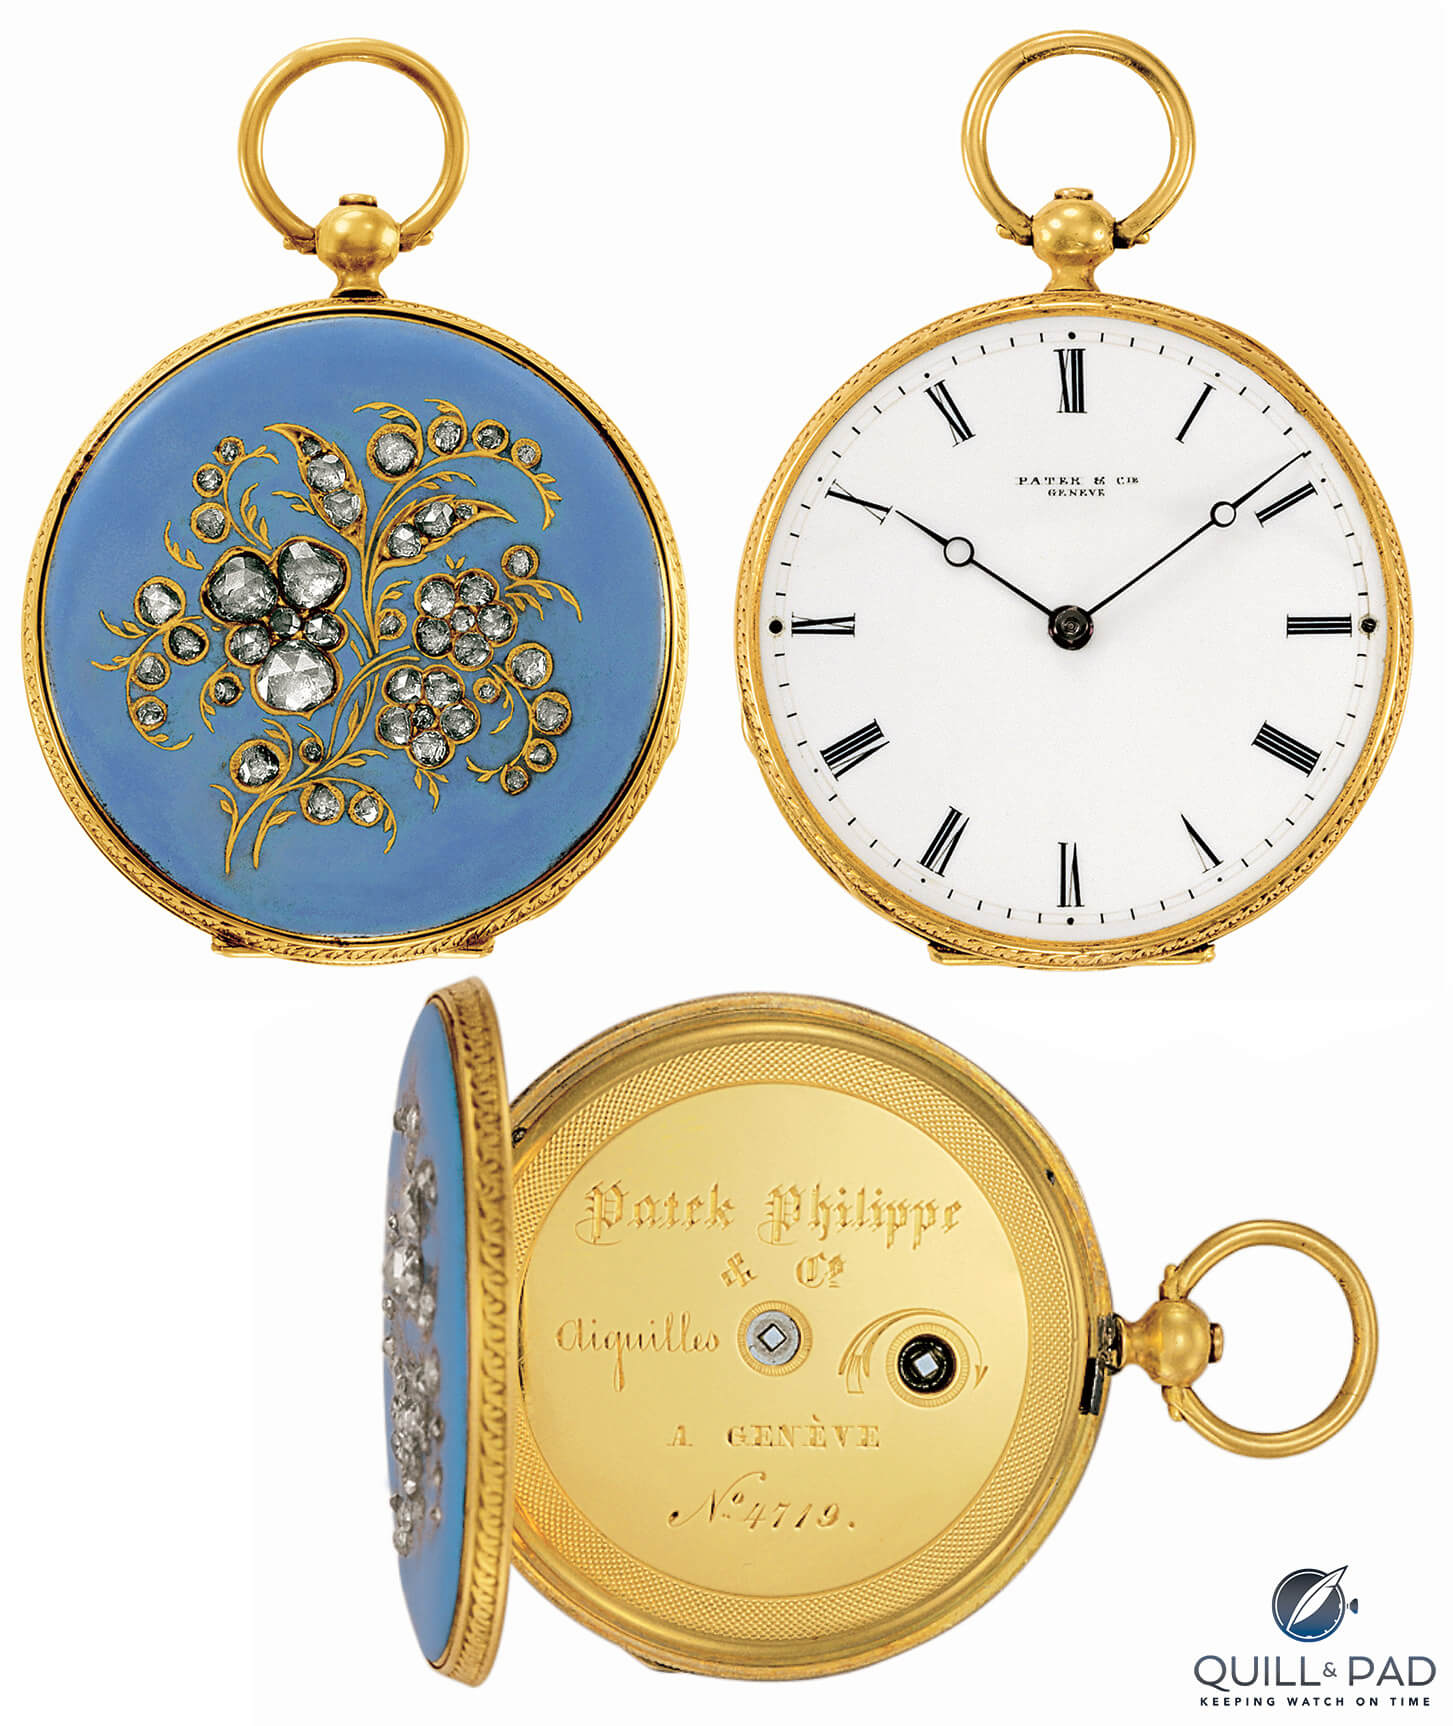 Patek Philippe pendant watch no. 4719 sold to Queen Victoria in 1851